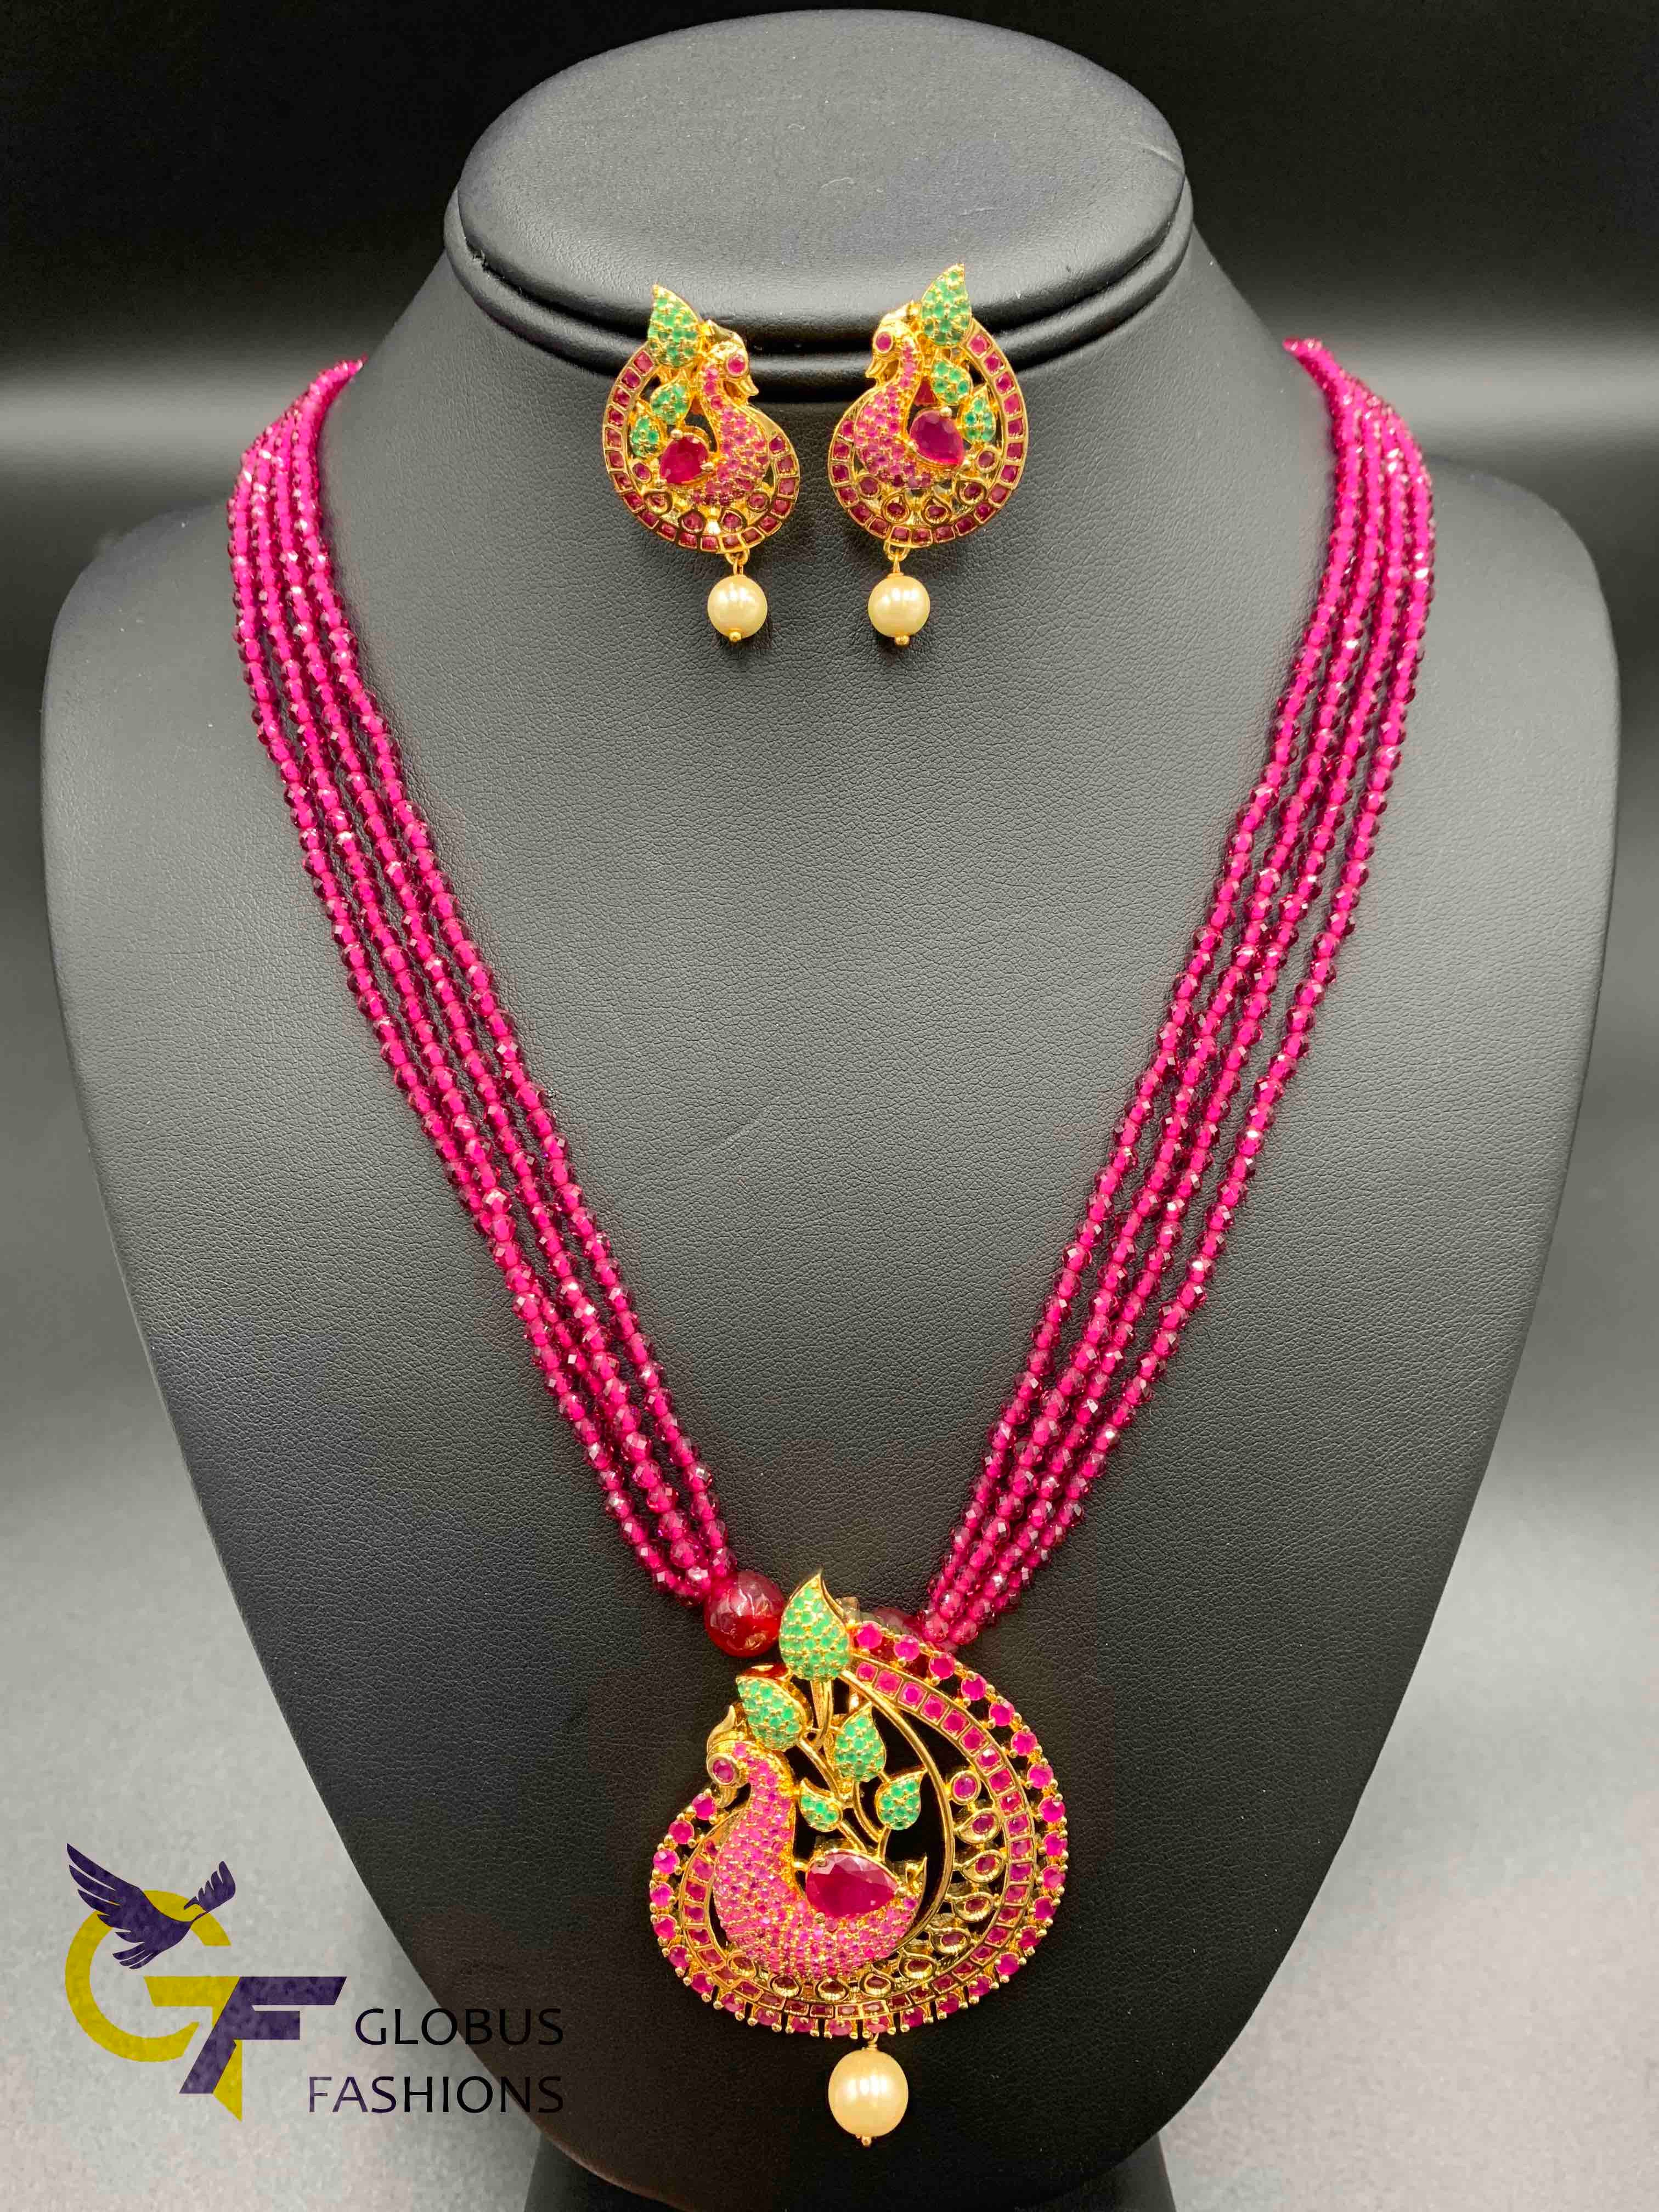 Crystal glass beads necklace with golden brushed bead pendant – Soyara  Ethnics Studio